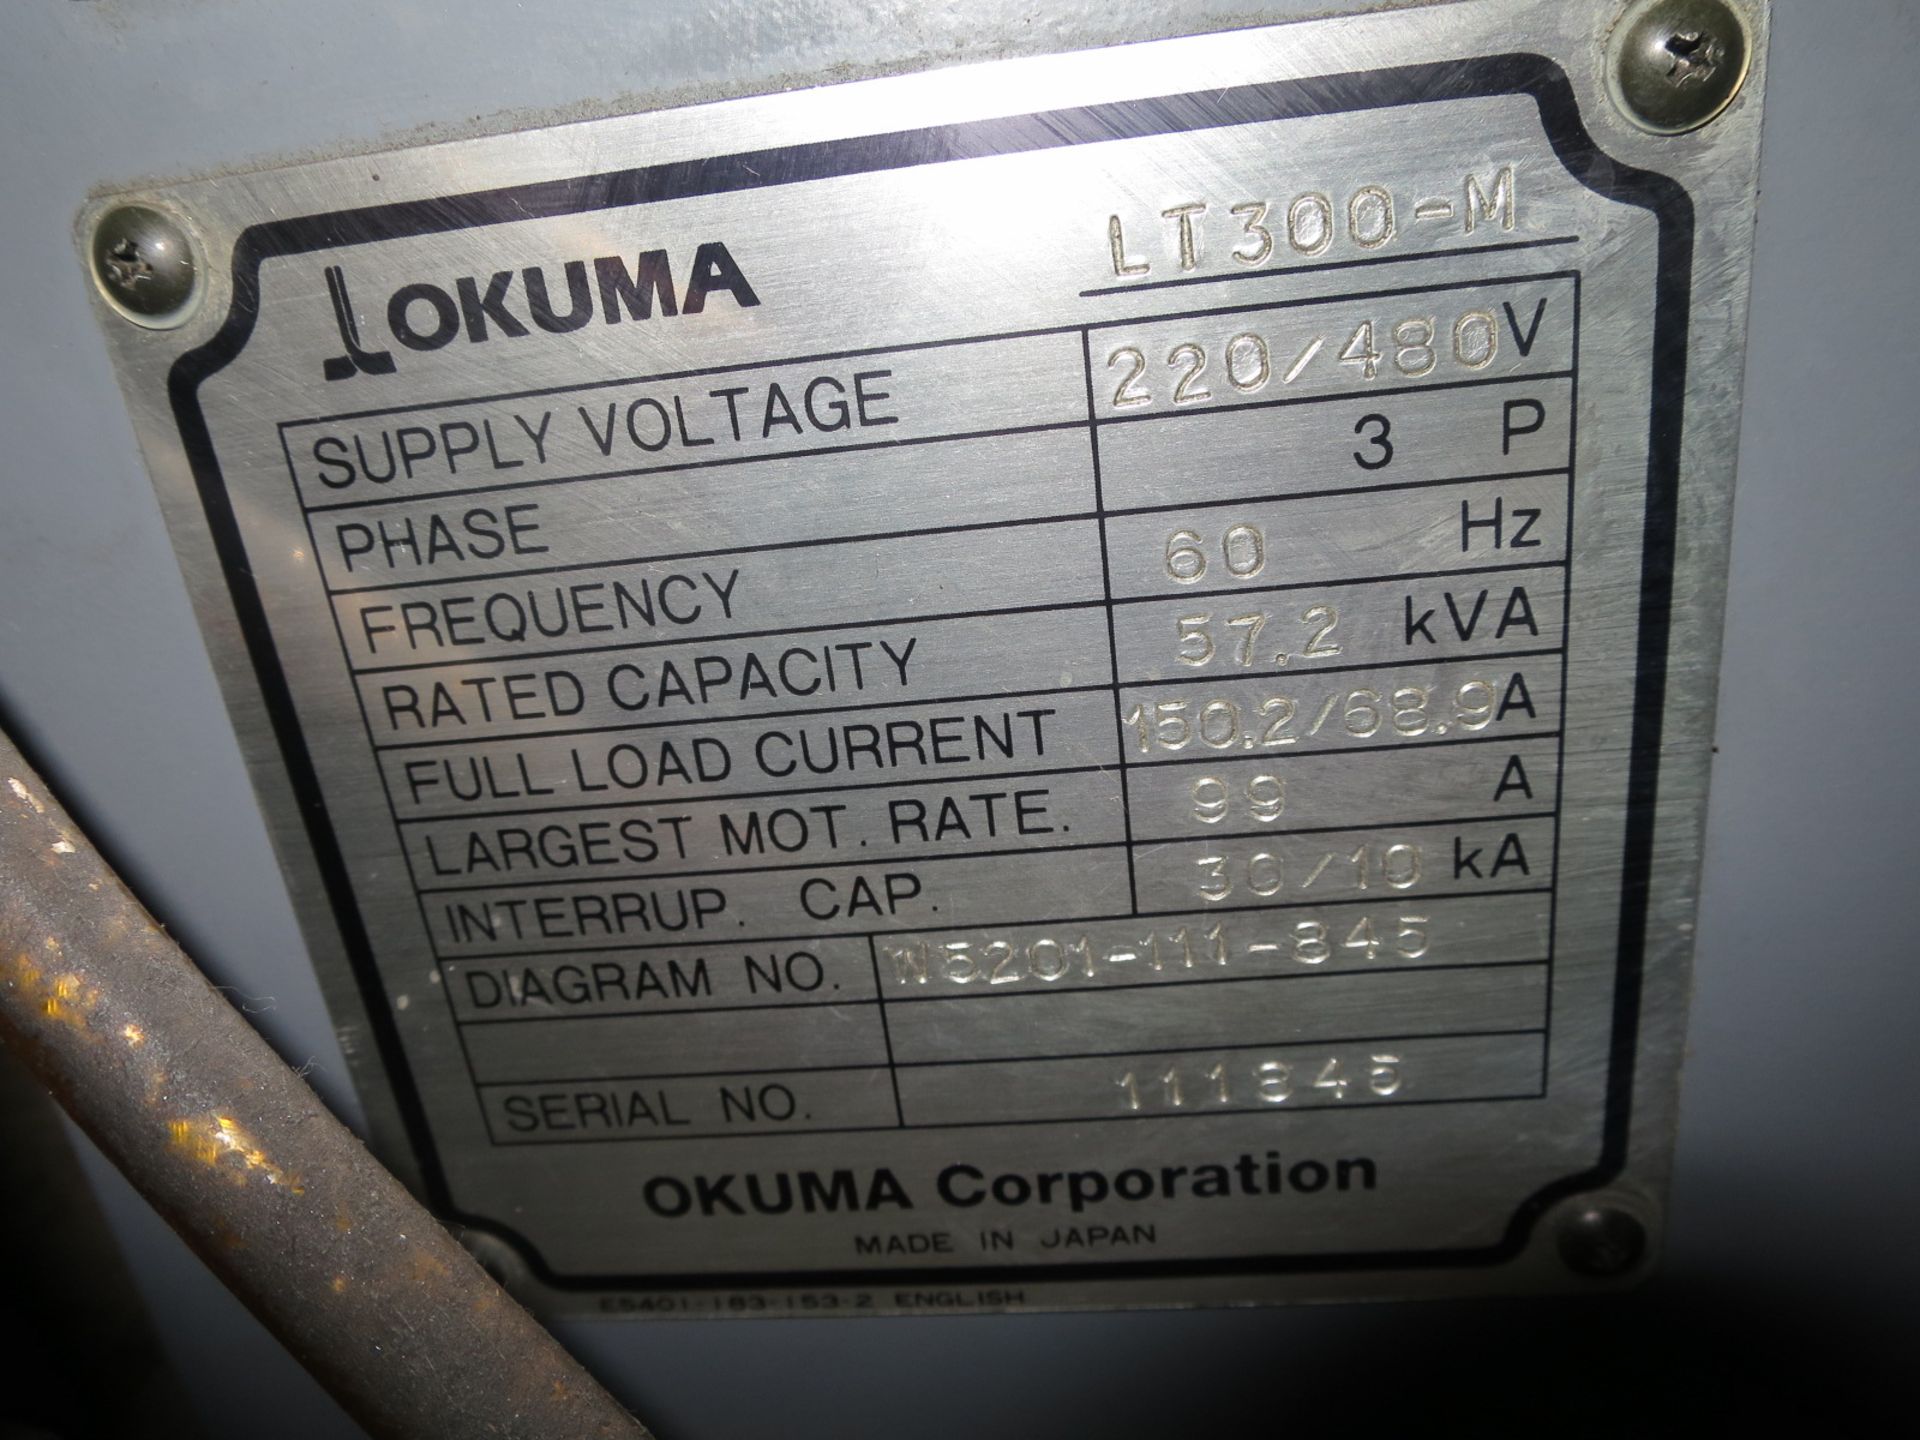 Okuma Twin Star LT300M Twin Spindle, Twin Turret CNC Lathe, S/N 111845, New 2004 - Image 13 of 13